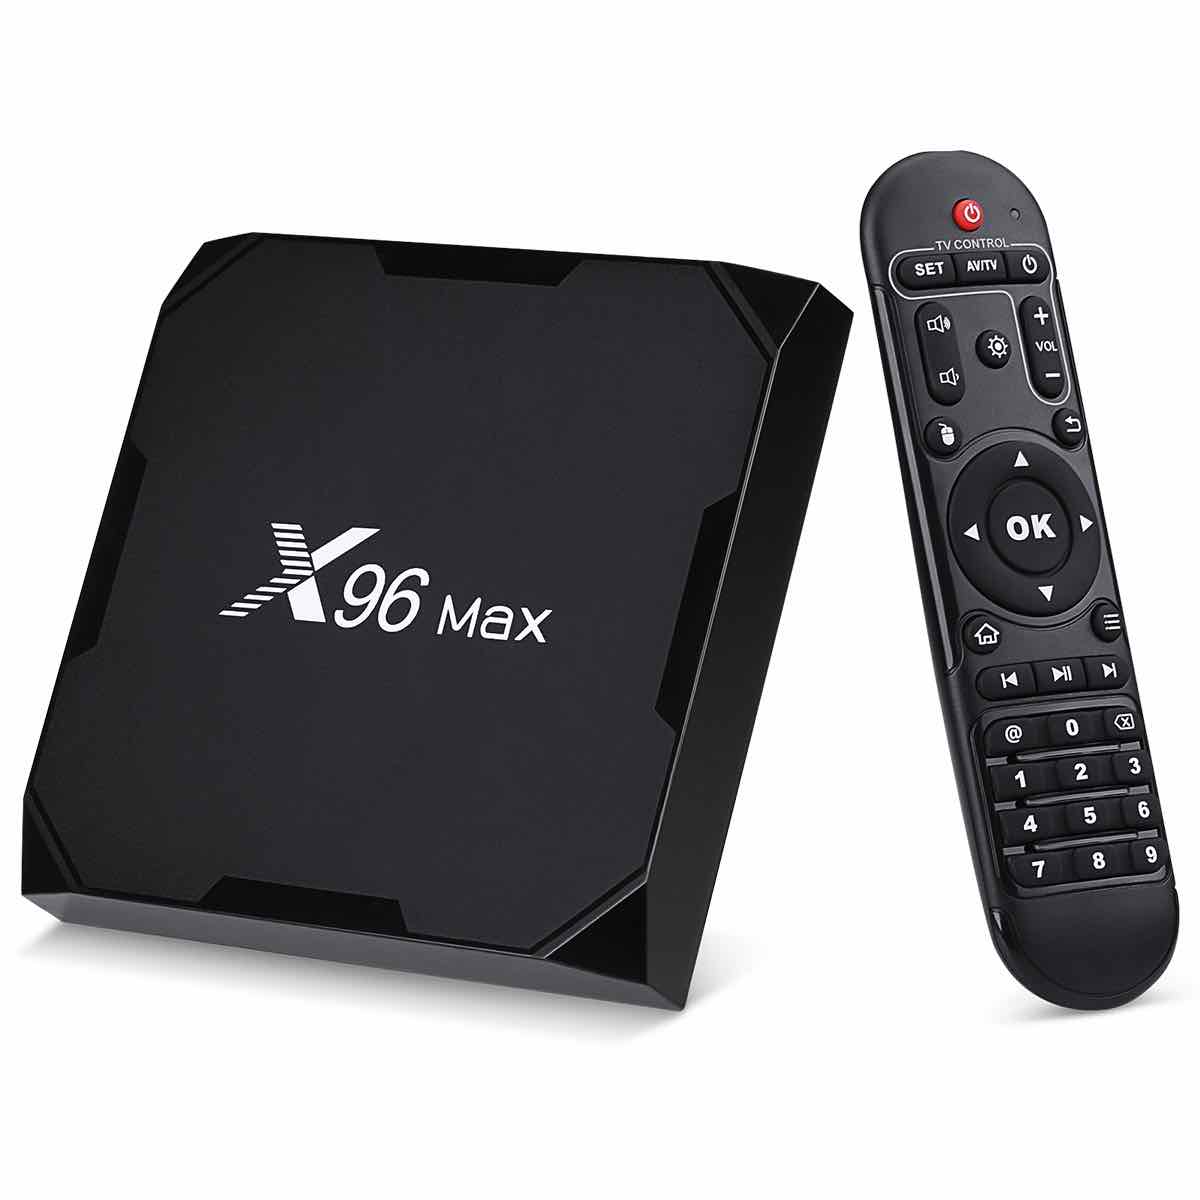 Андроид тв приставка iptv. Smart TV Box x96 Max. Смарт приставка x96 Max Plus. Смарт приставка x96max+4/32gb. Android приставка x96 Max.